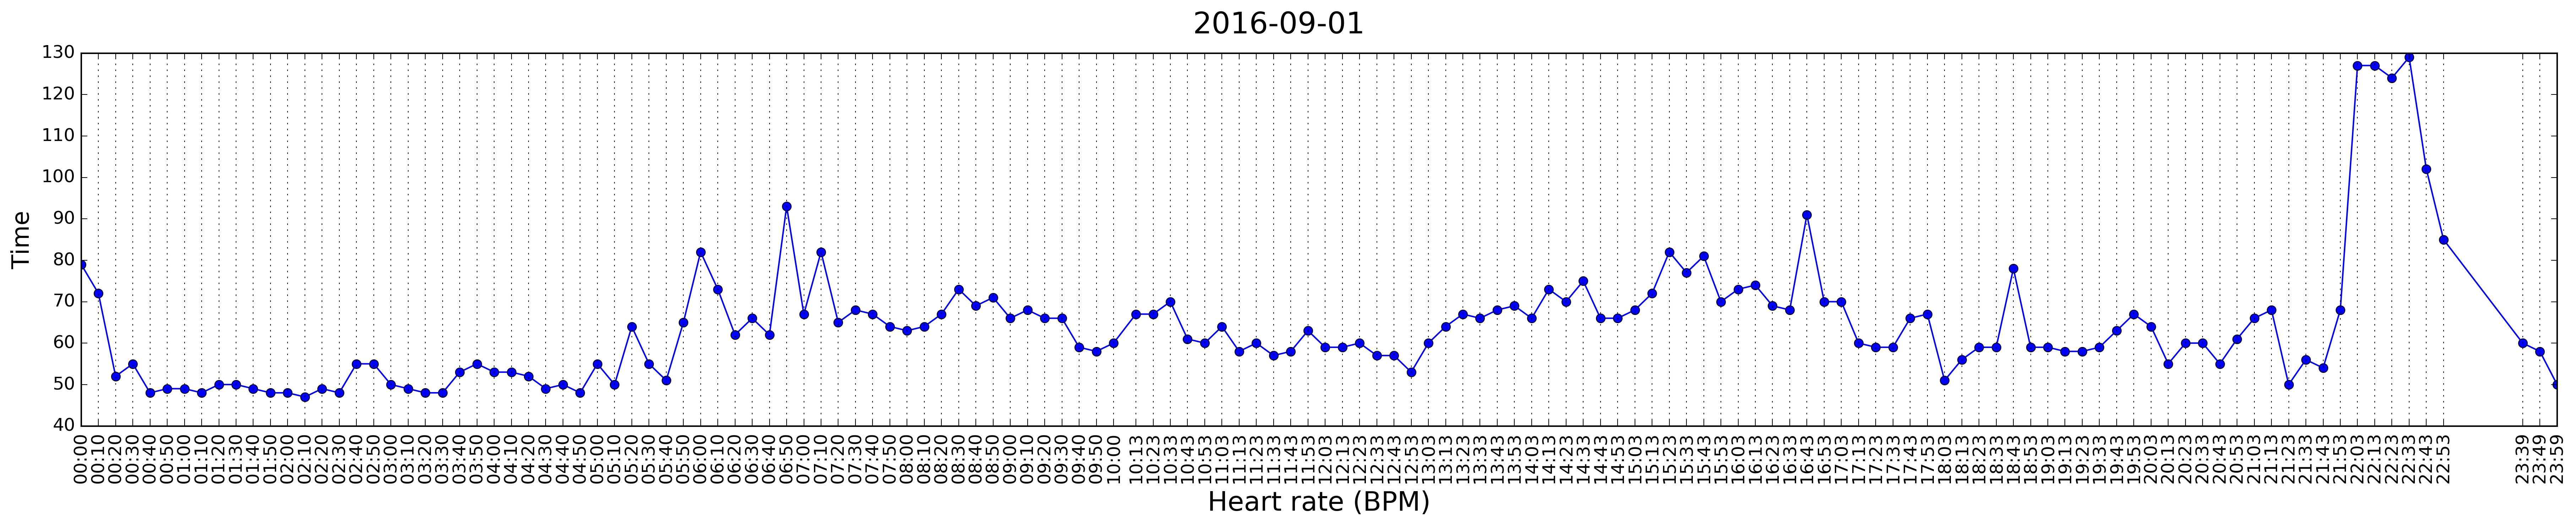 2016-09-01-heart